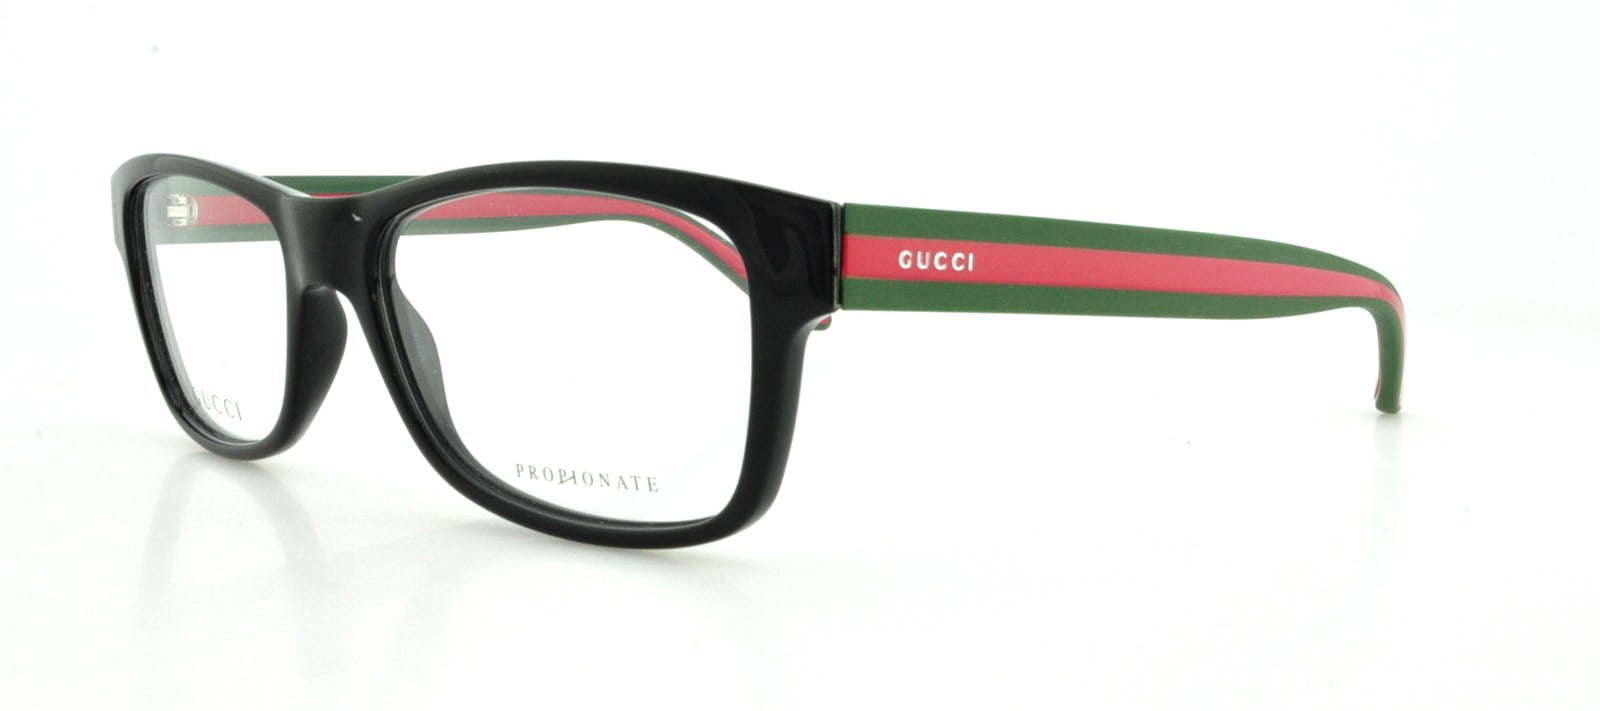 gucci eyeglasses walmart